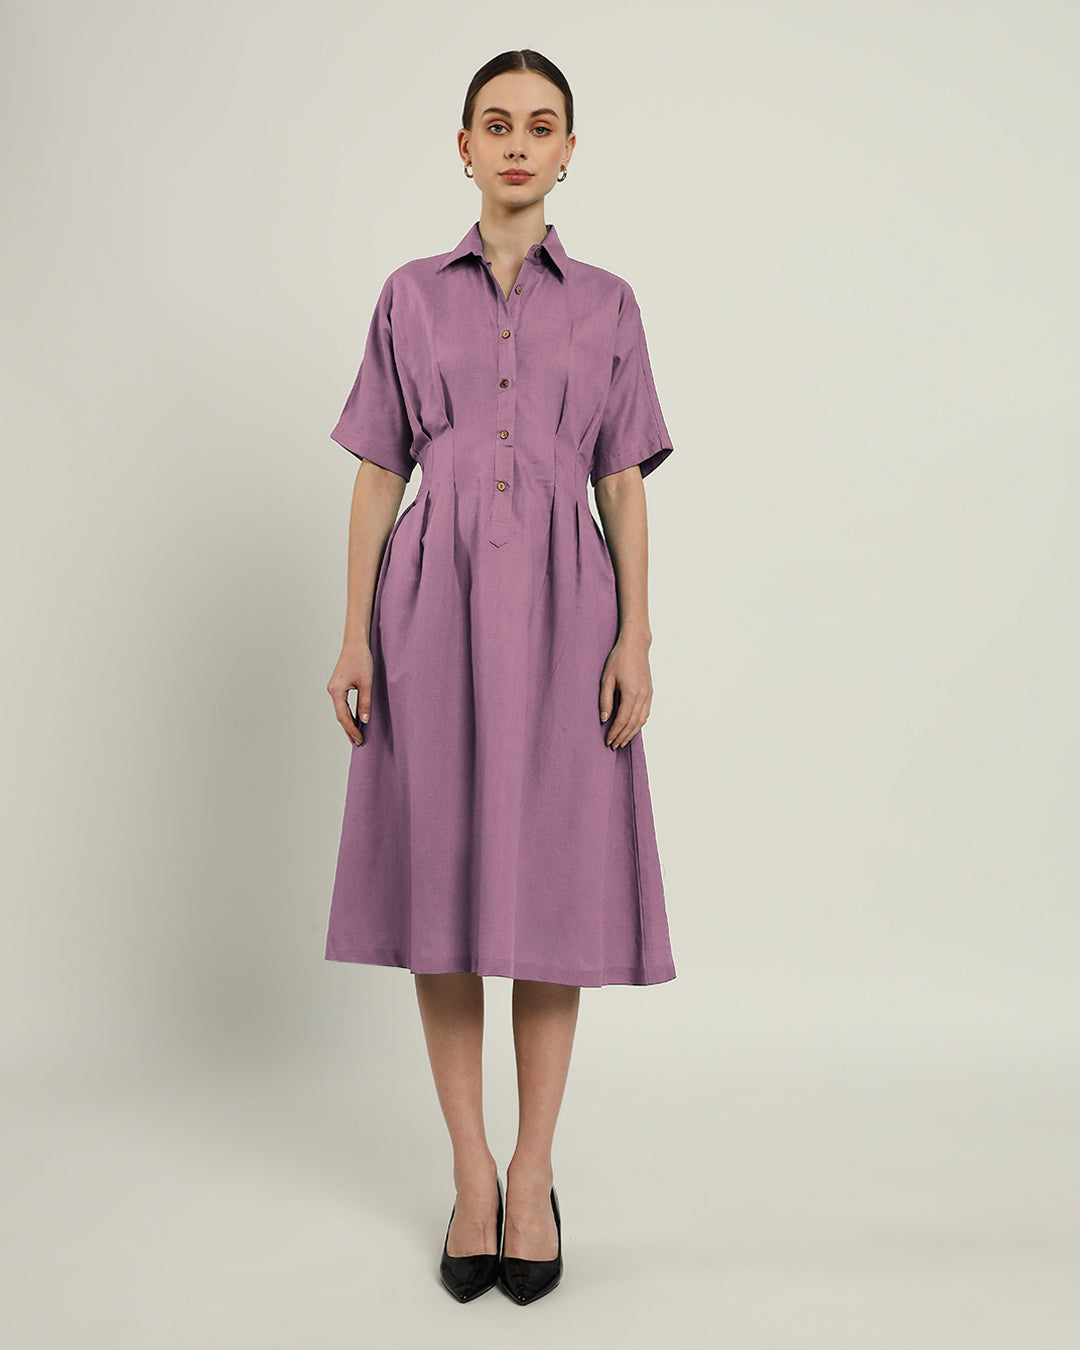 The Salford Purple Swirl Dress